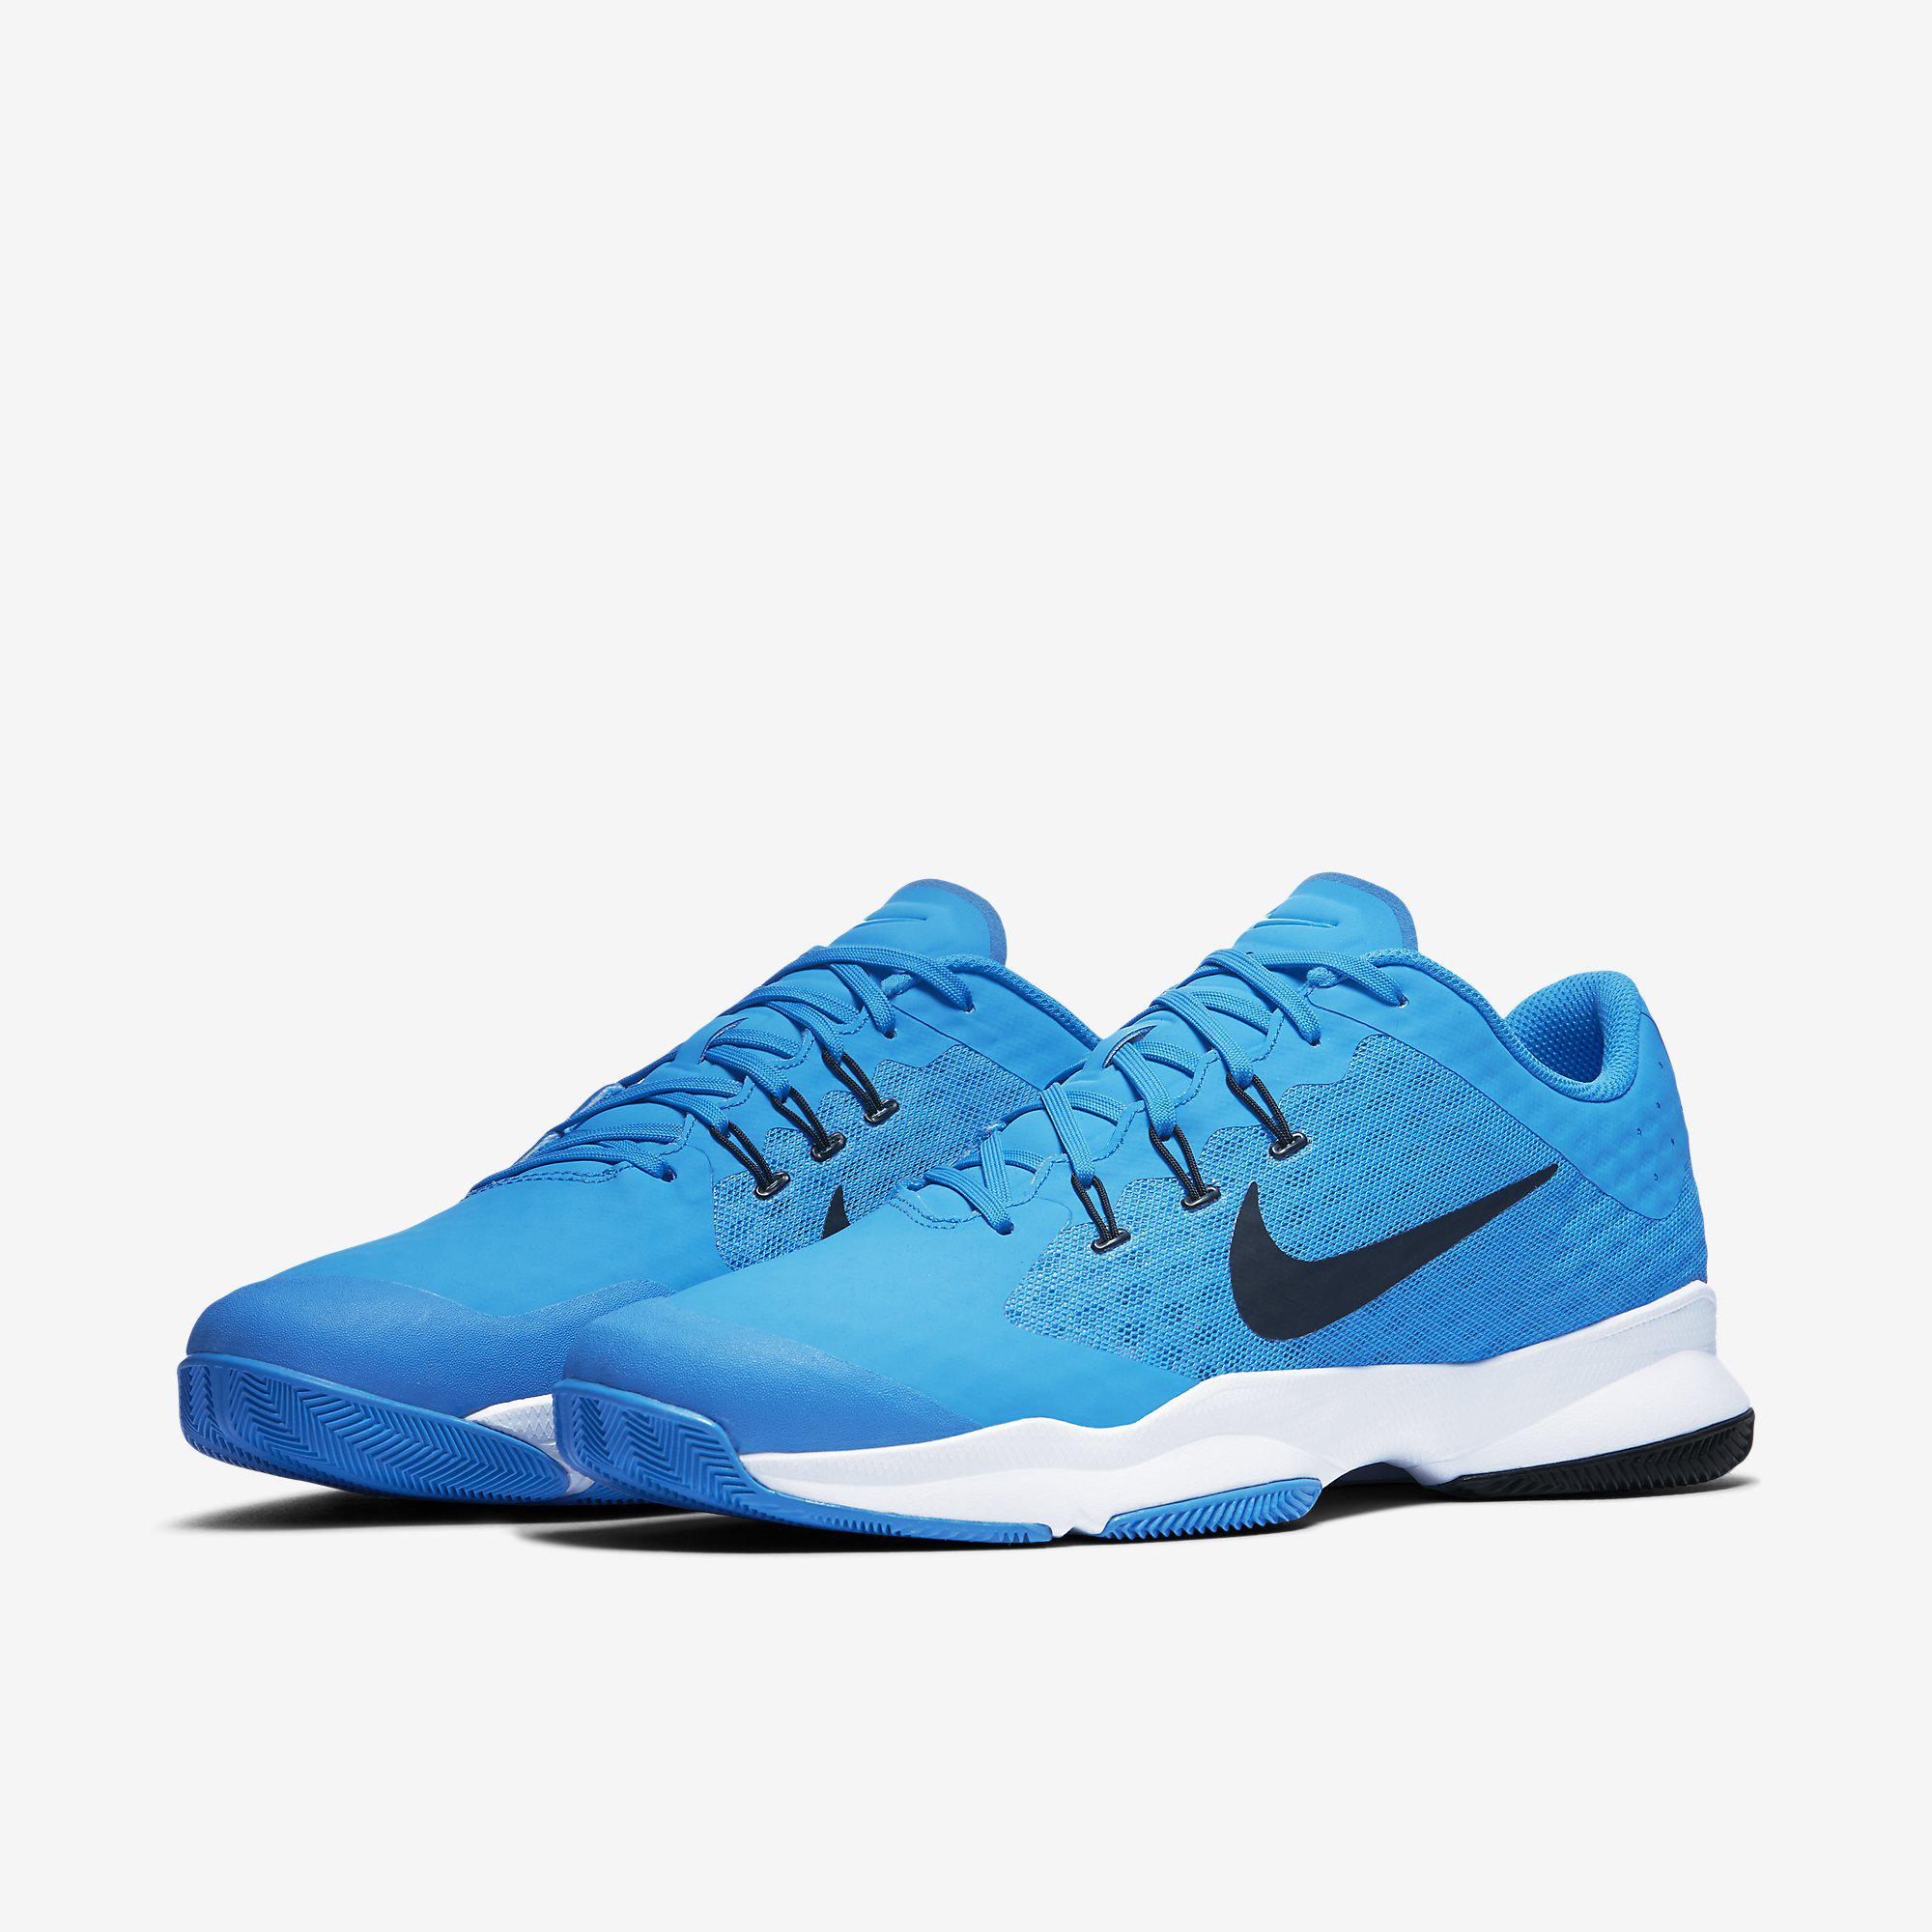  Nike  Mens Air  Zoom Ultra Tennis Shoes  Blue Glow Black 